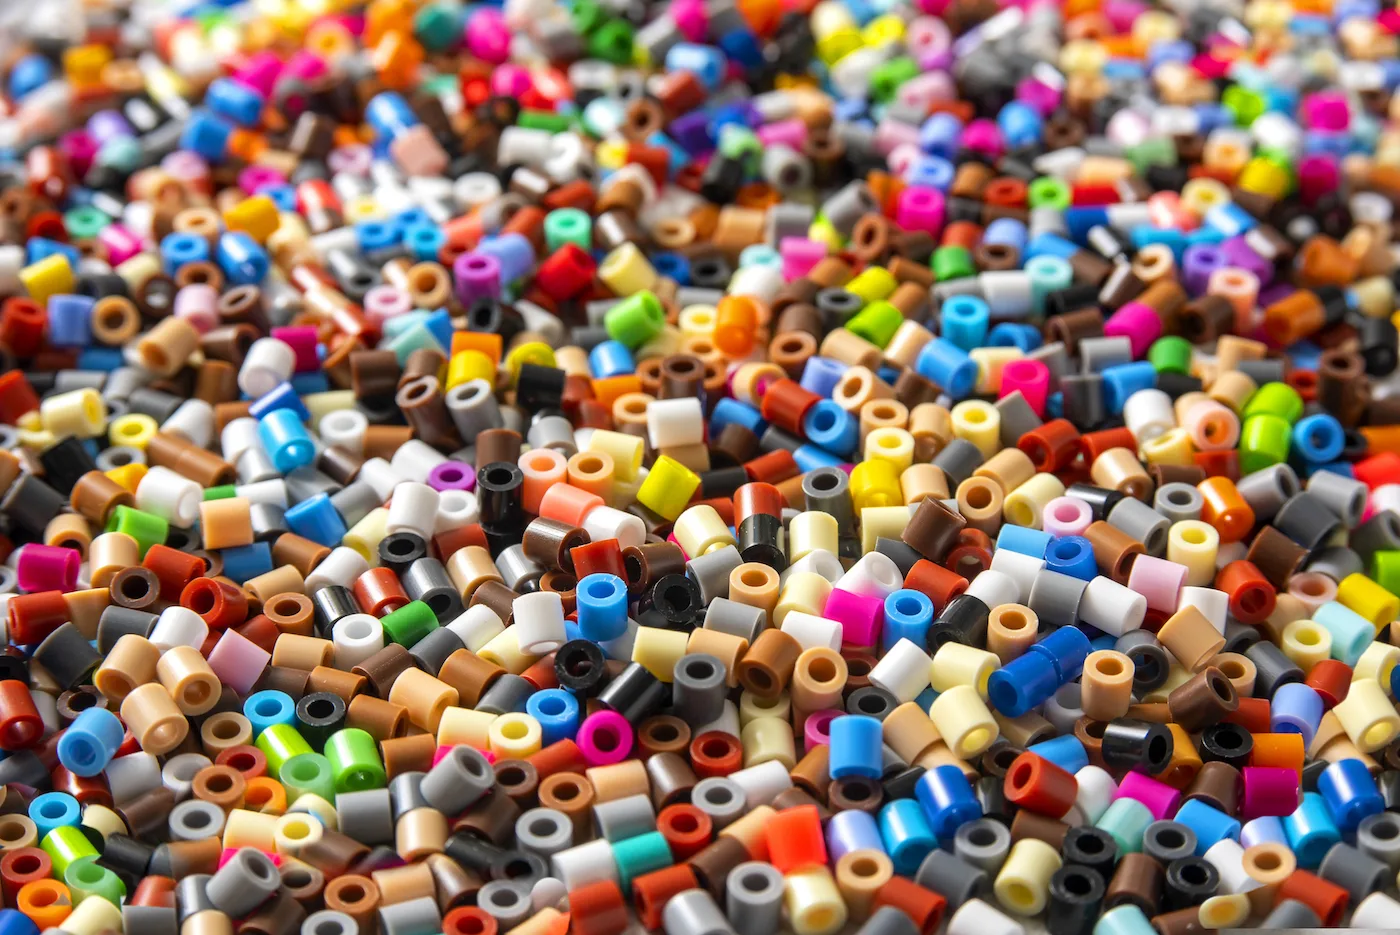 Huge pile of colorful perler beads